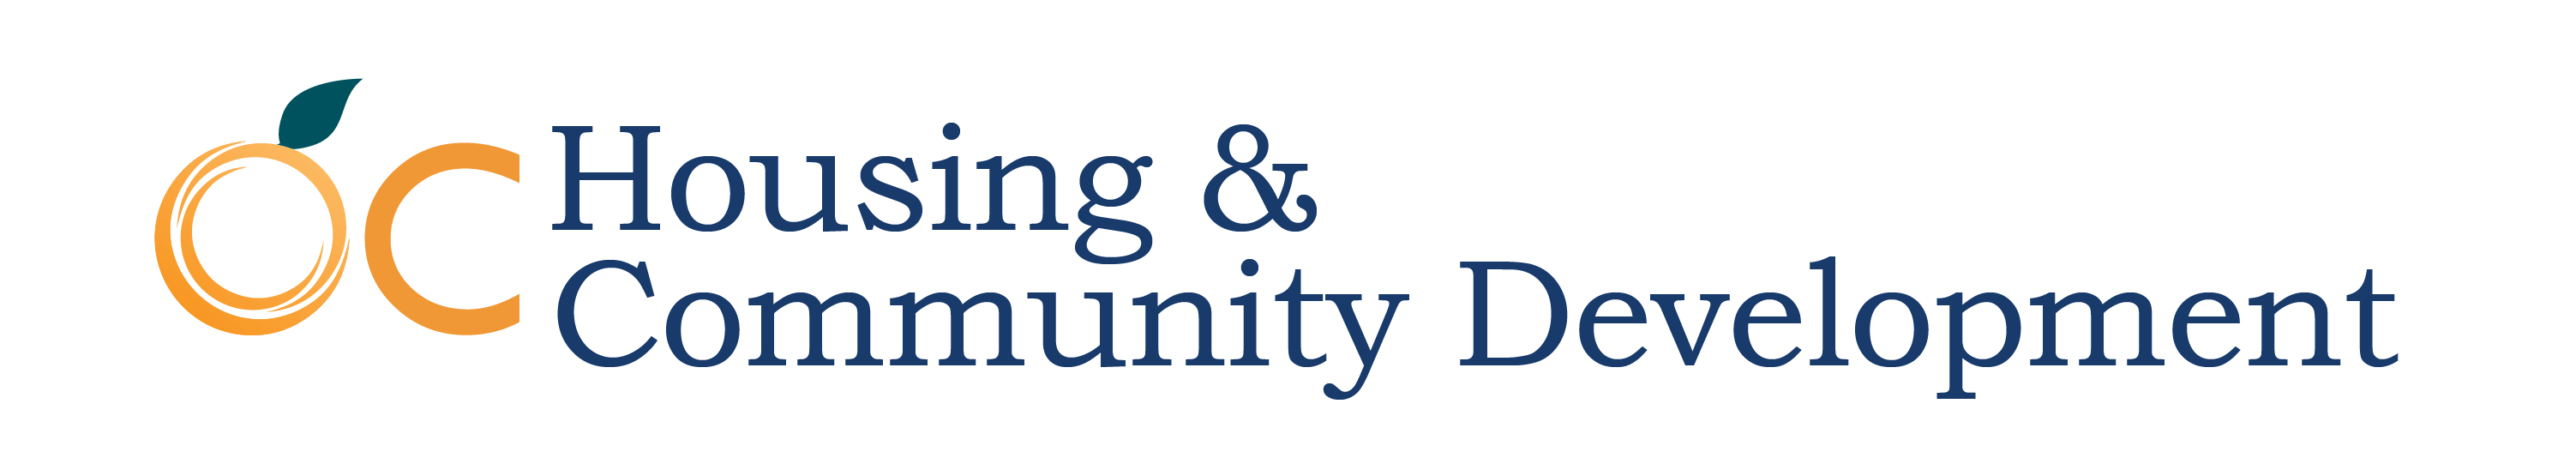 OC Housing & Community Development Logo -- Home